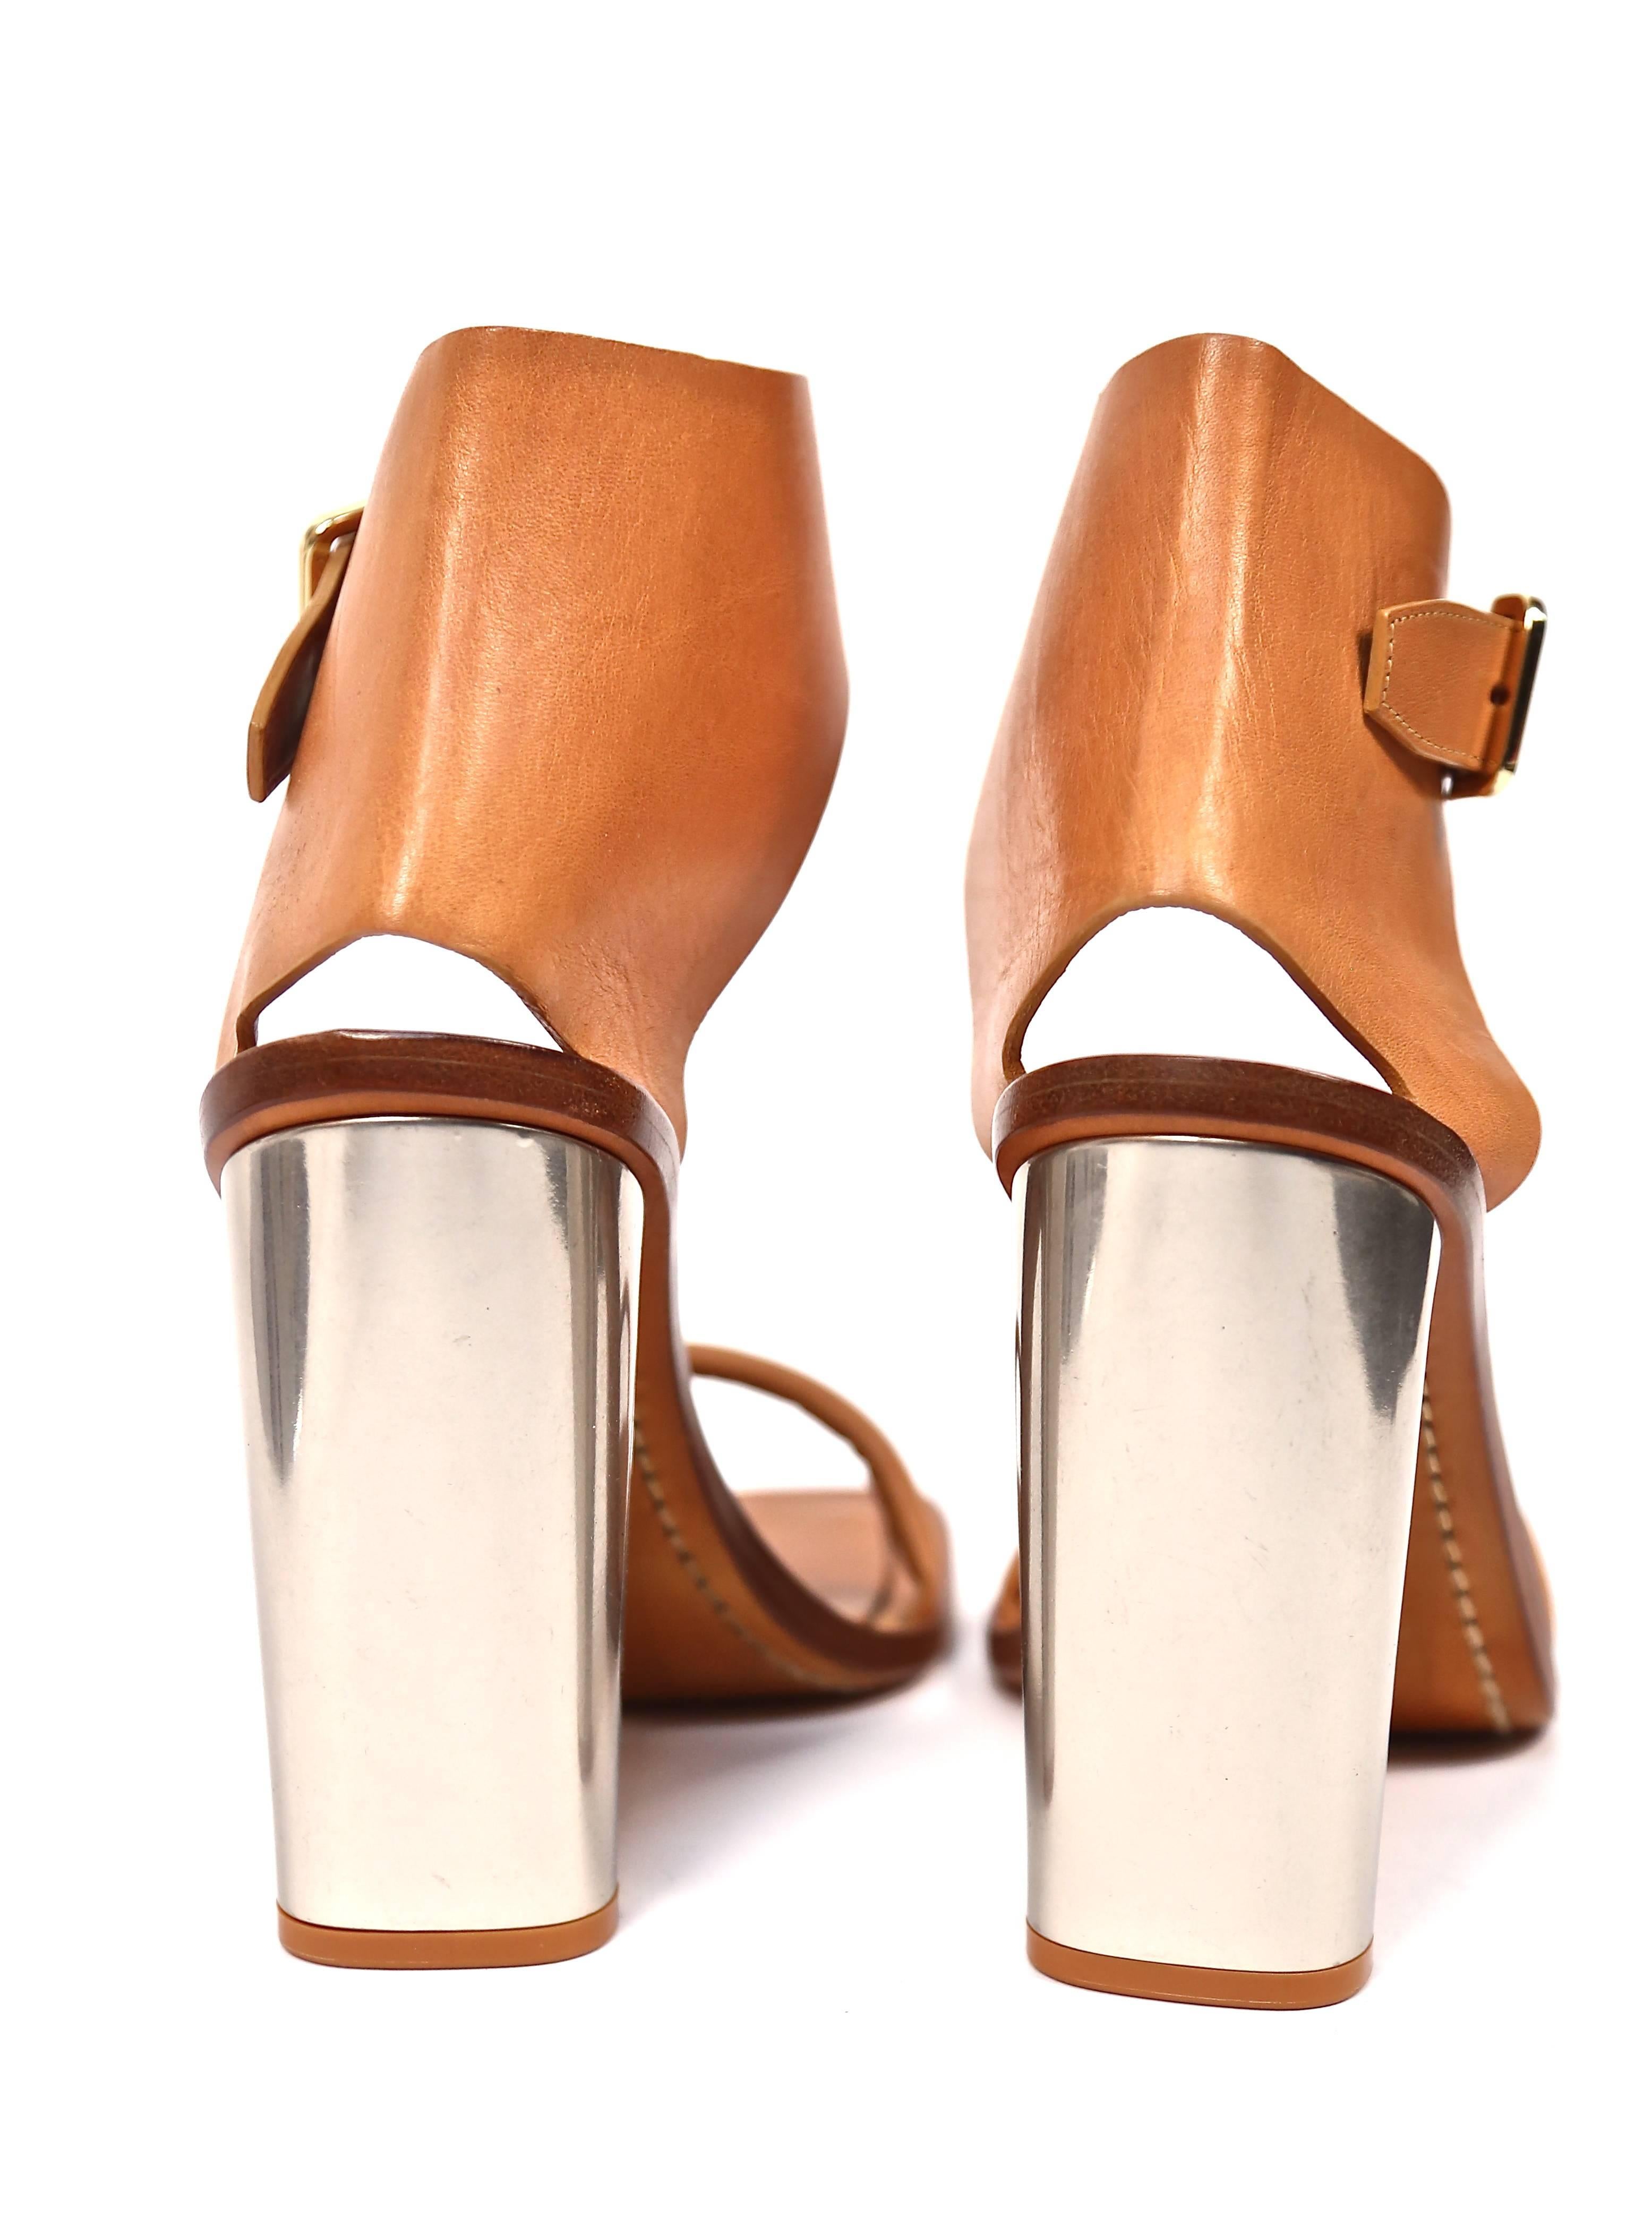 Brown unworn CELINE tan leather bam bam sandals with metal heels 40.5 